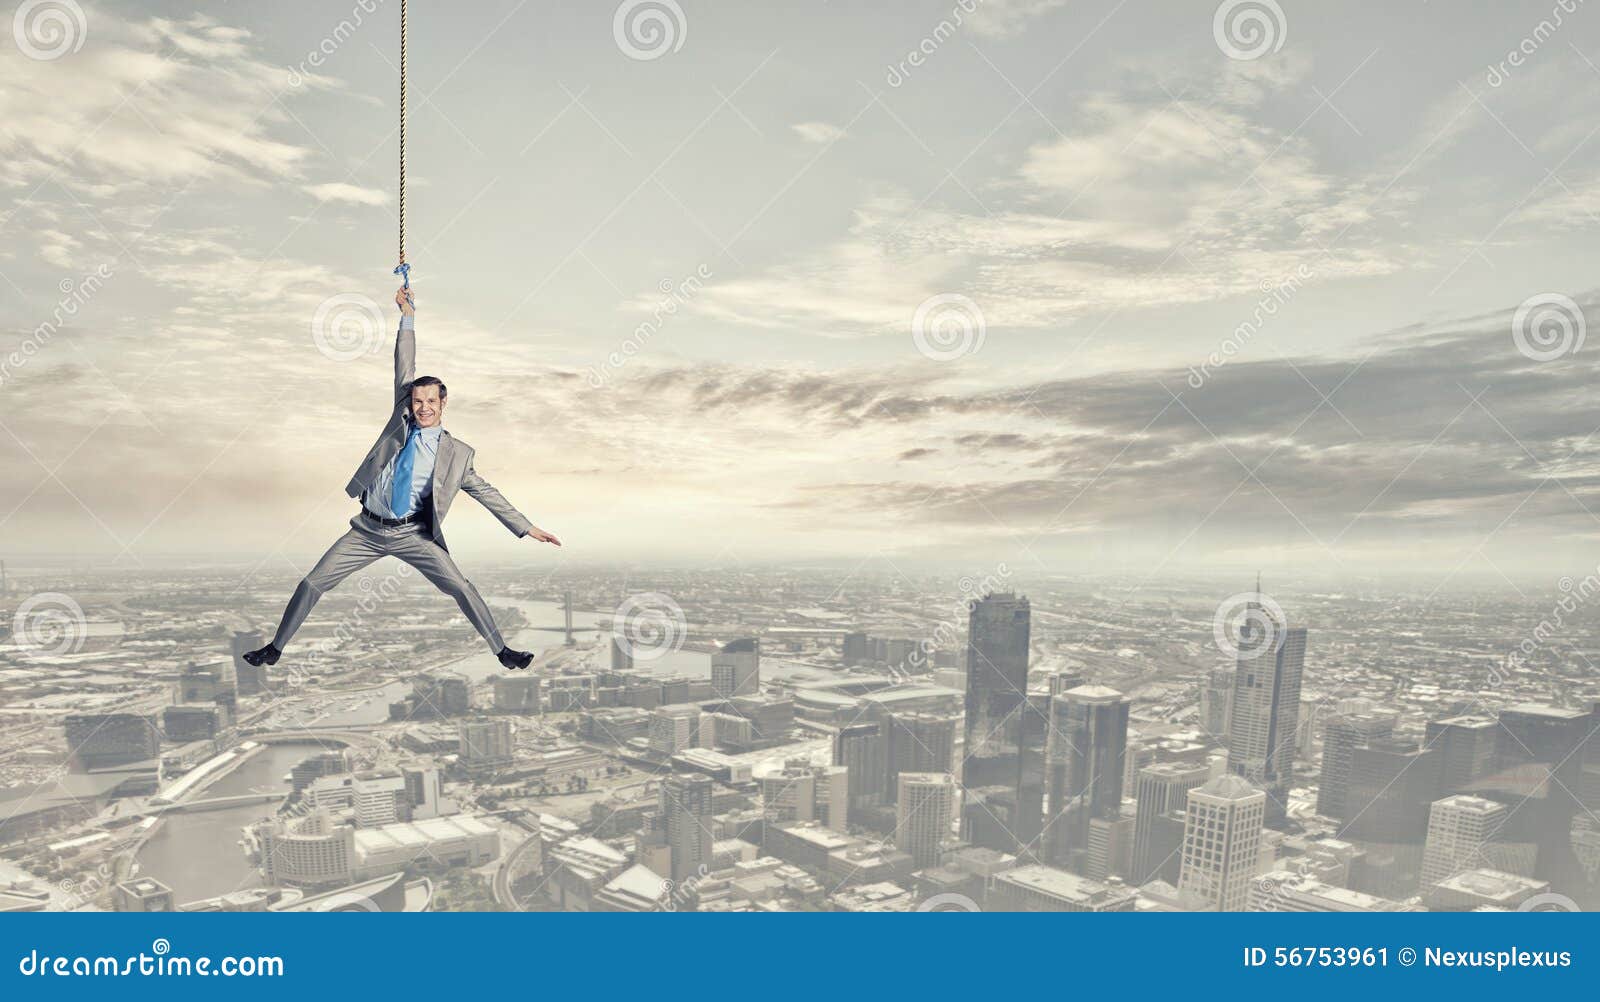 Man hang on rope stock image. Image of rope, panic, crisis - 56753961